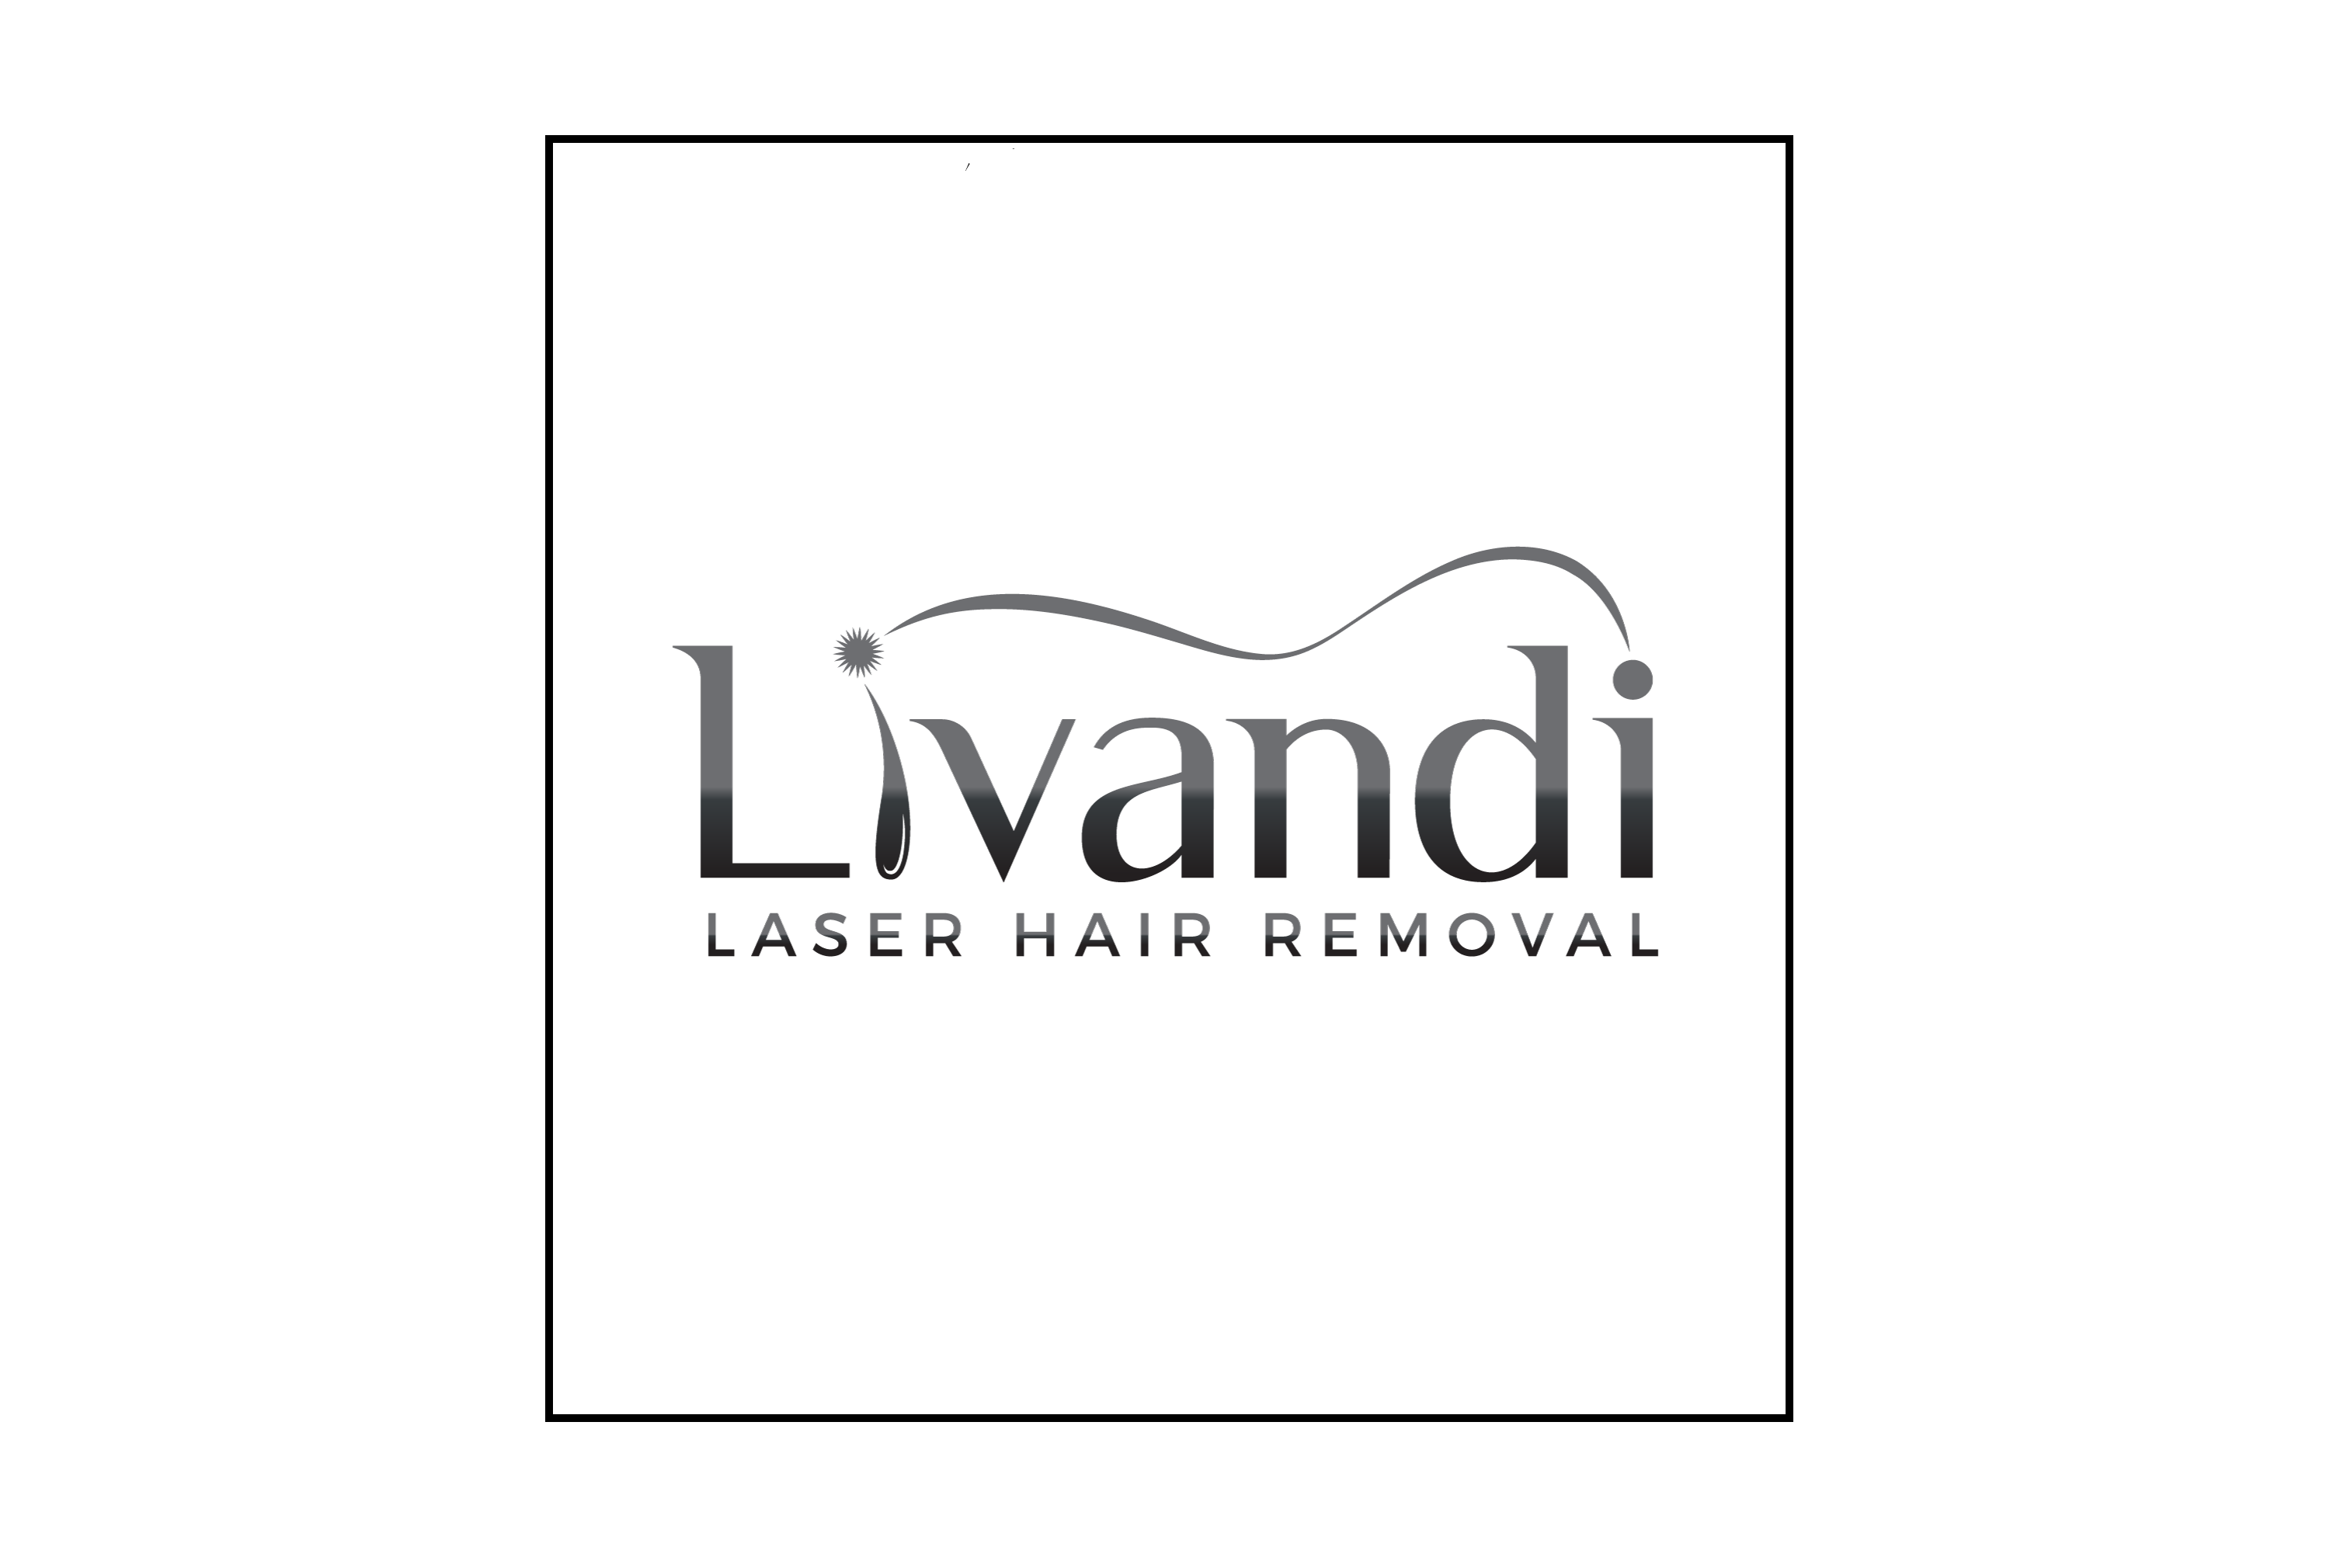 Livandi-LaserHairRemoval